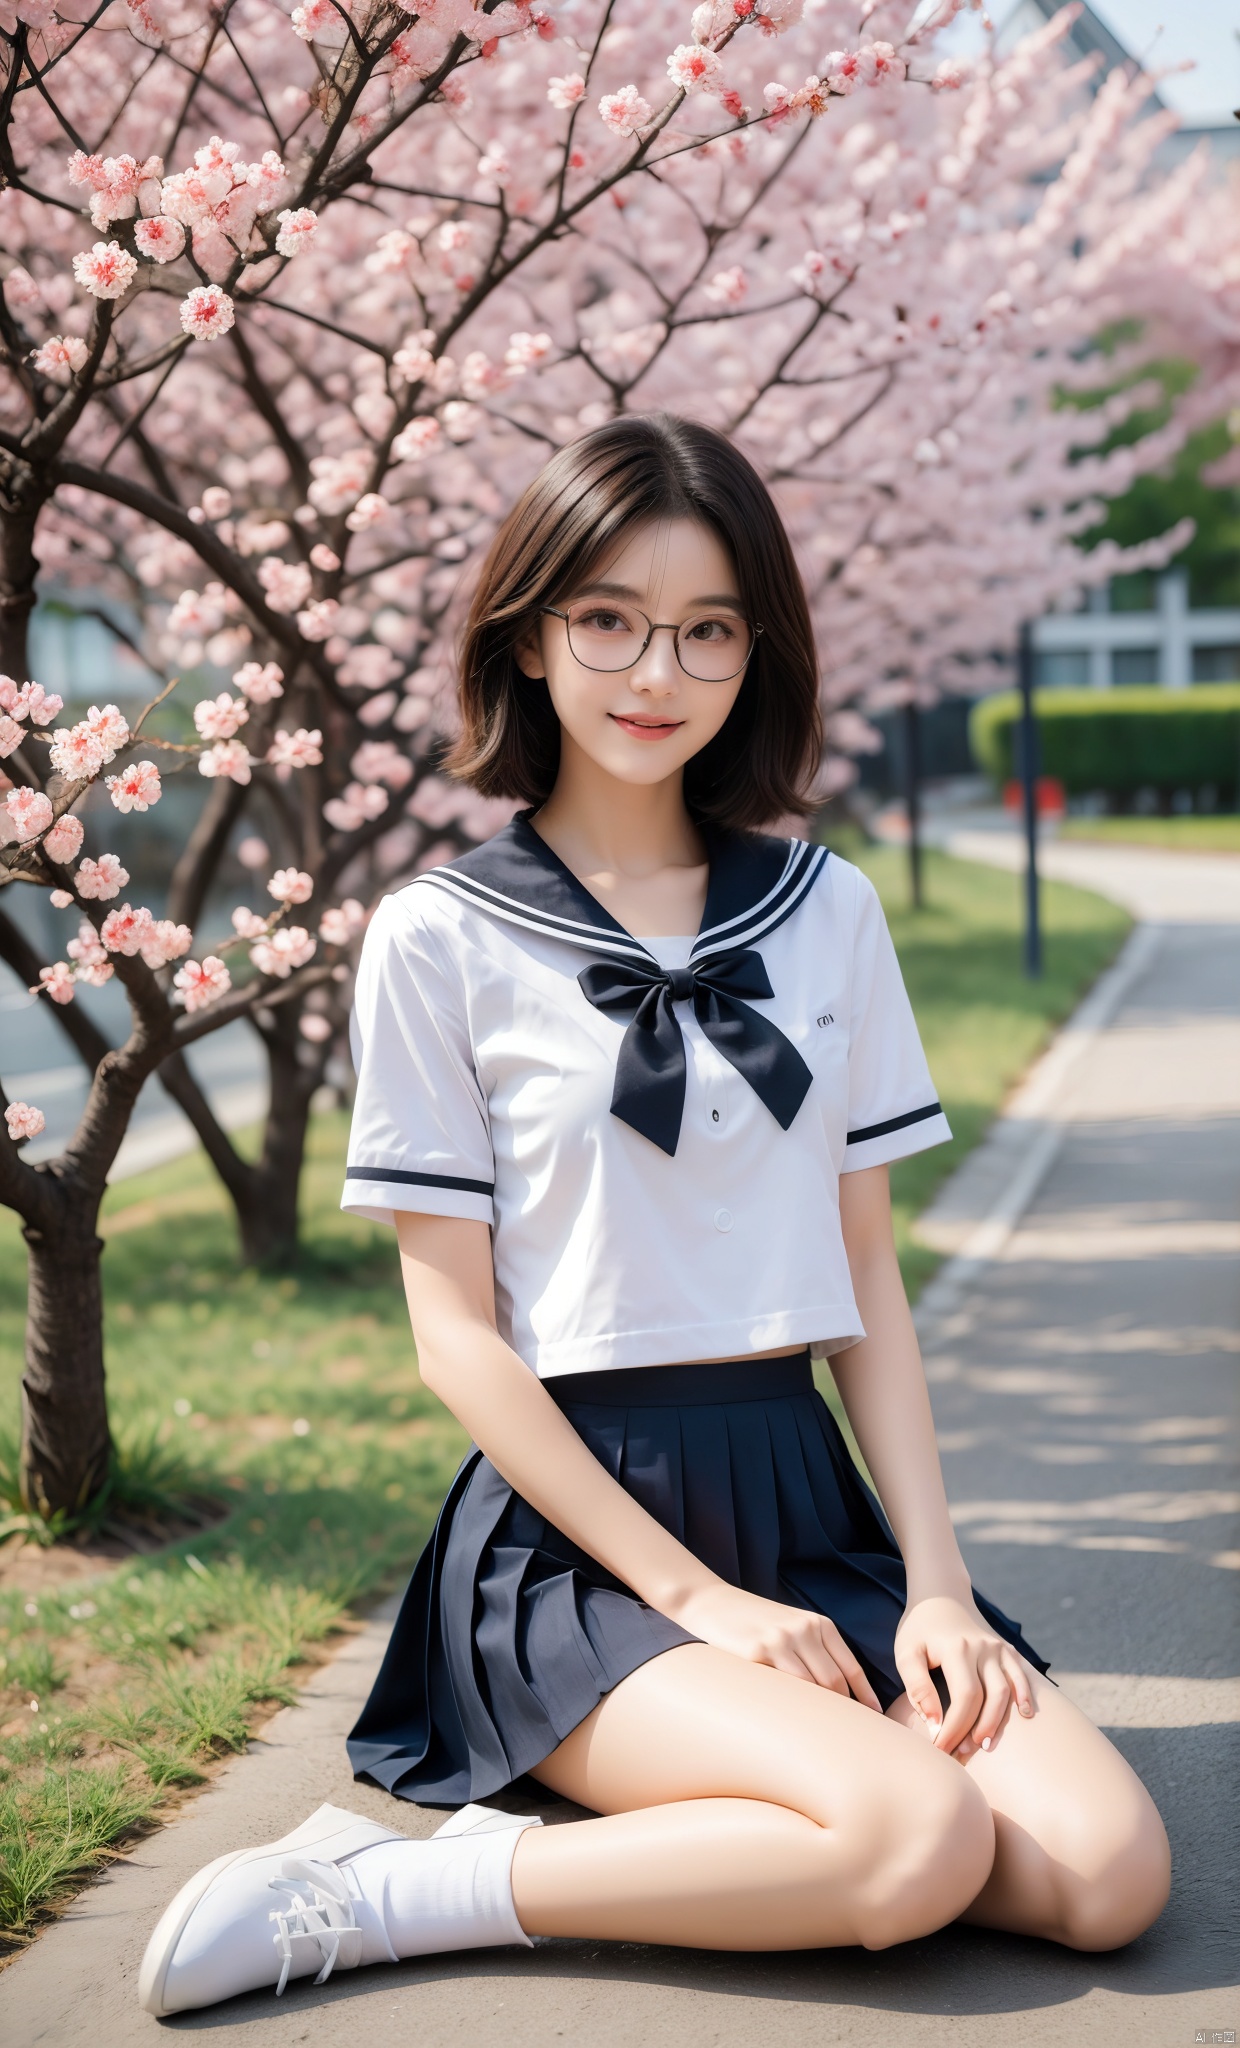 Enhanced, masterpiece, 16K, JK, 1 girl, glasses, short hair, school uniform, skirt, sneakers, body, cherry blossom background, petals falling